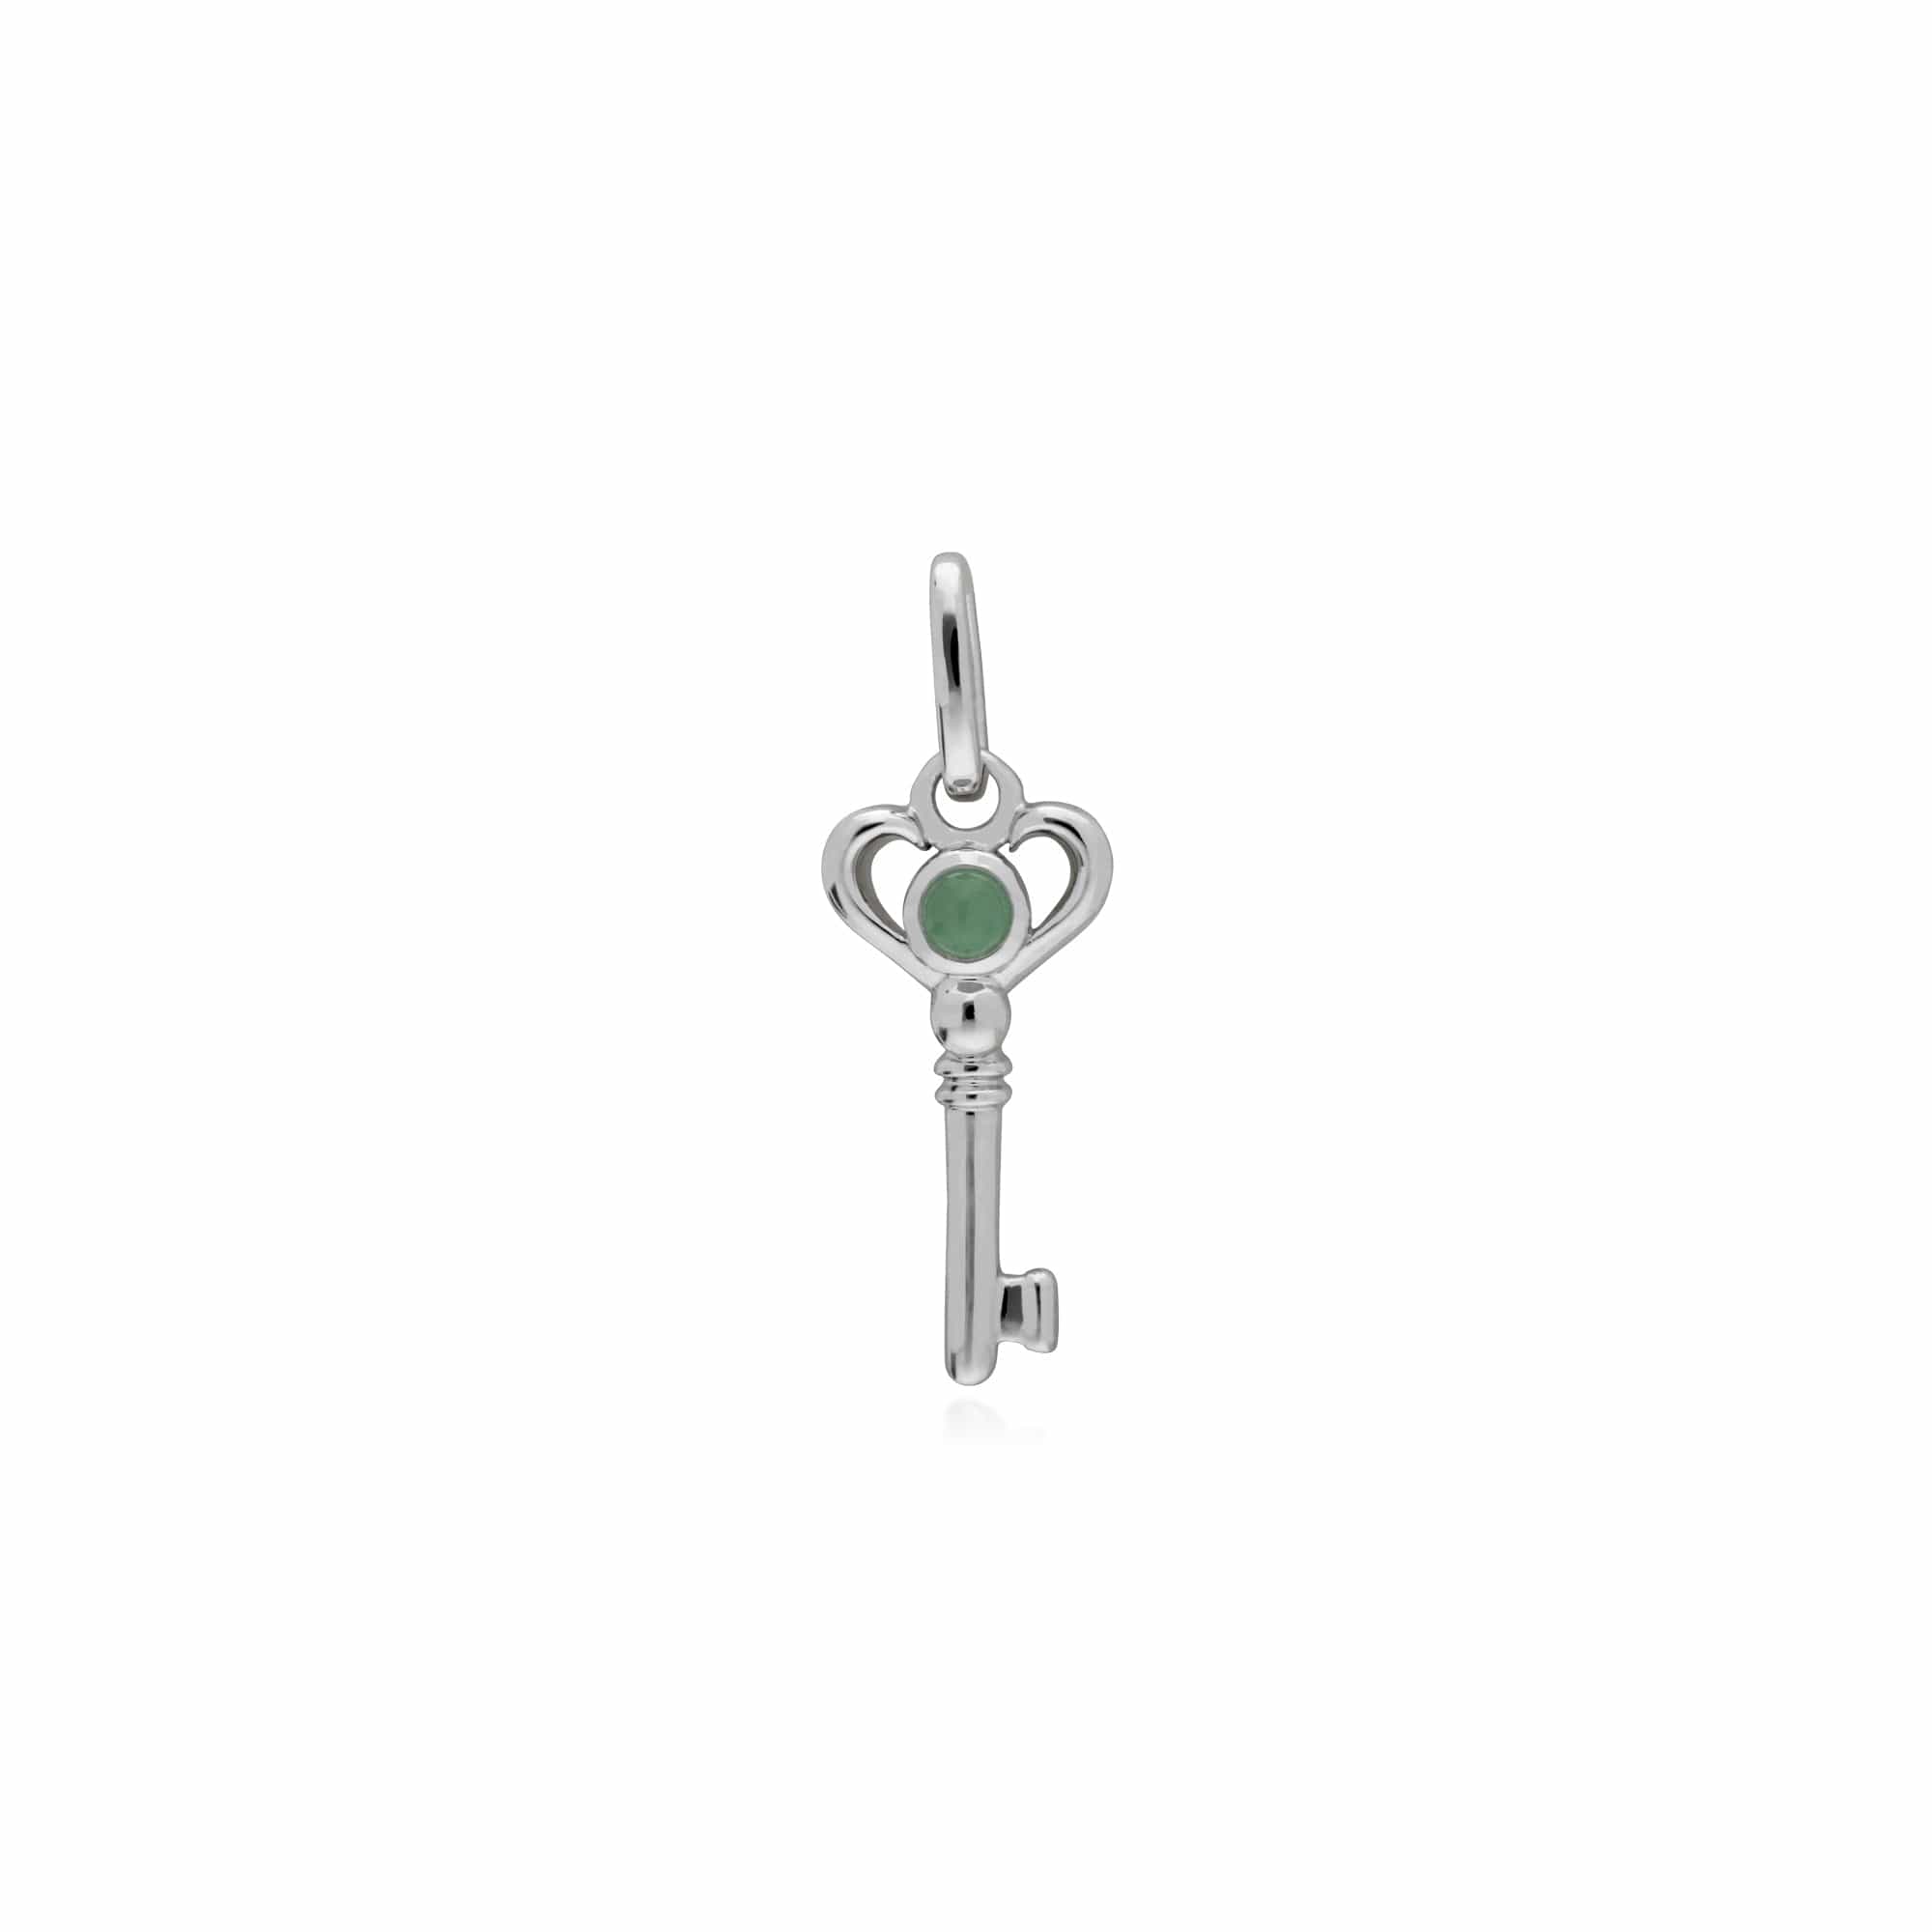 270P027501925-270P026601925 Classic Swirl Heart Lock Pendant & Jade Key Charm in 925 Sterling Silver 2